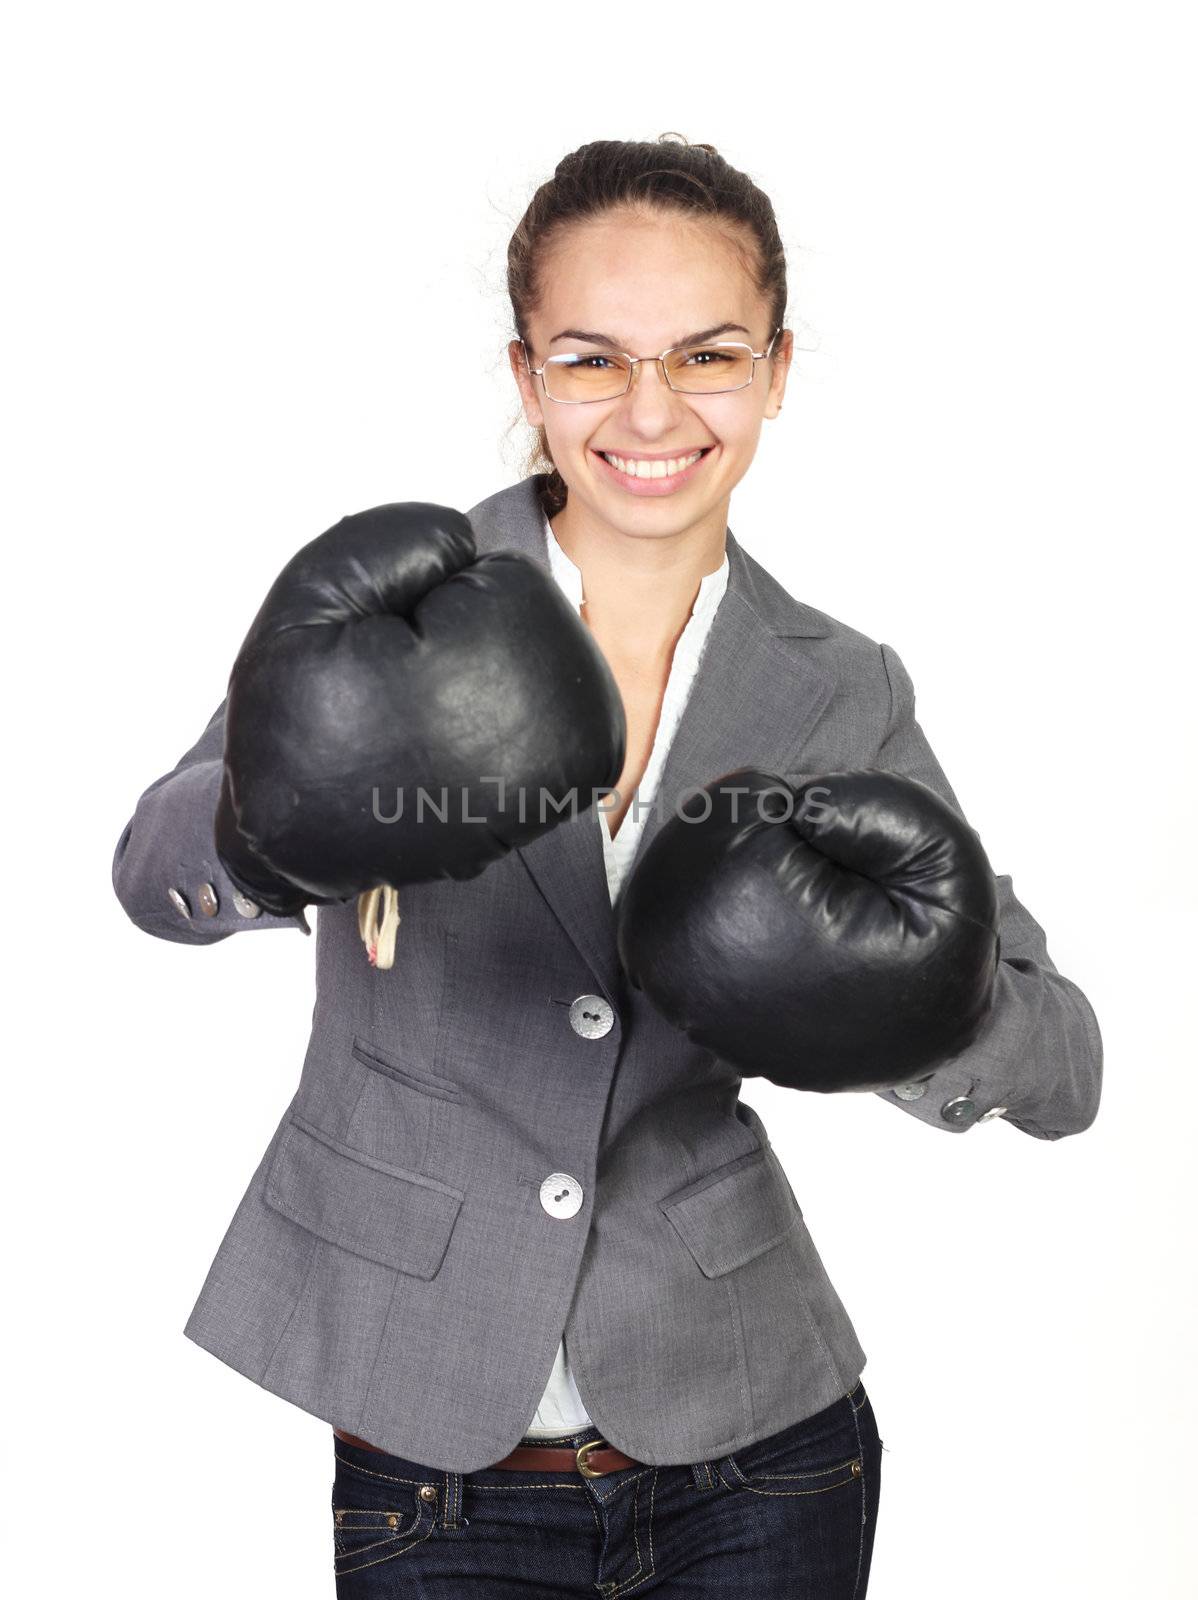 Boxing businesswoman by destillat